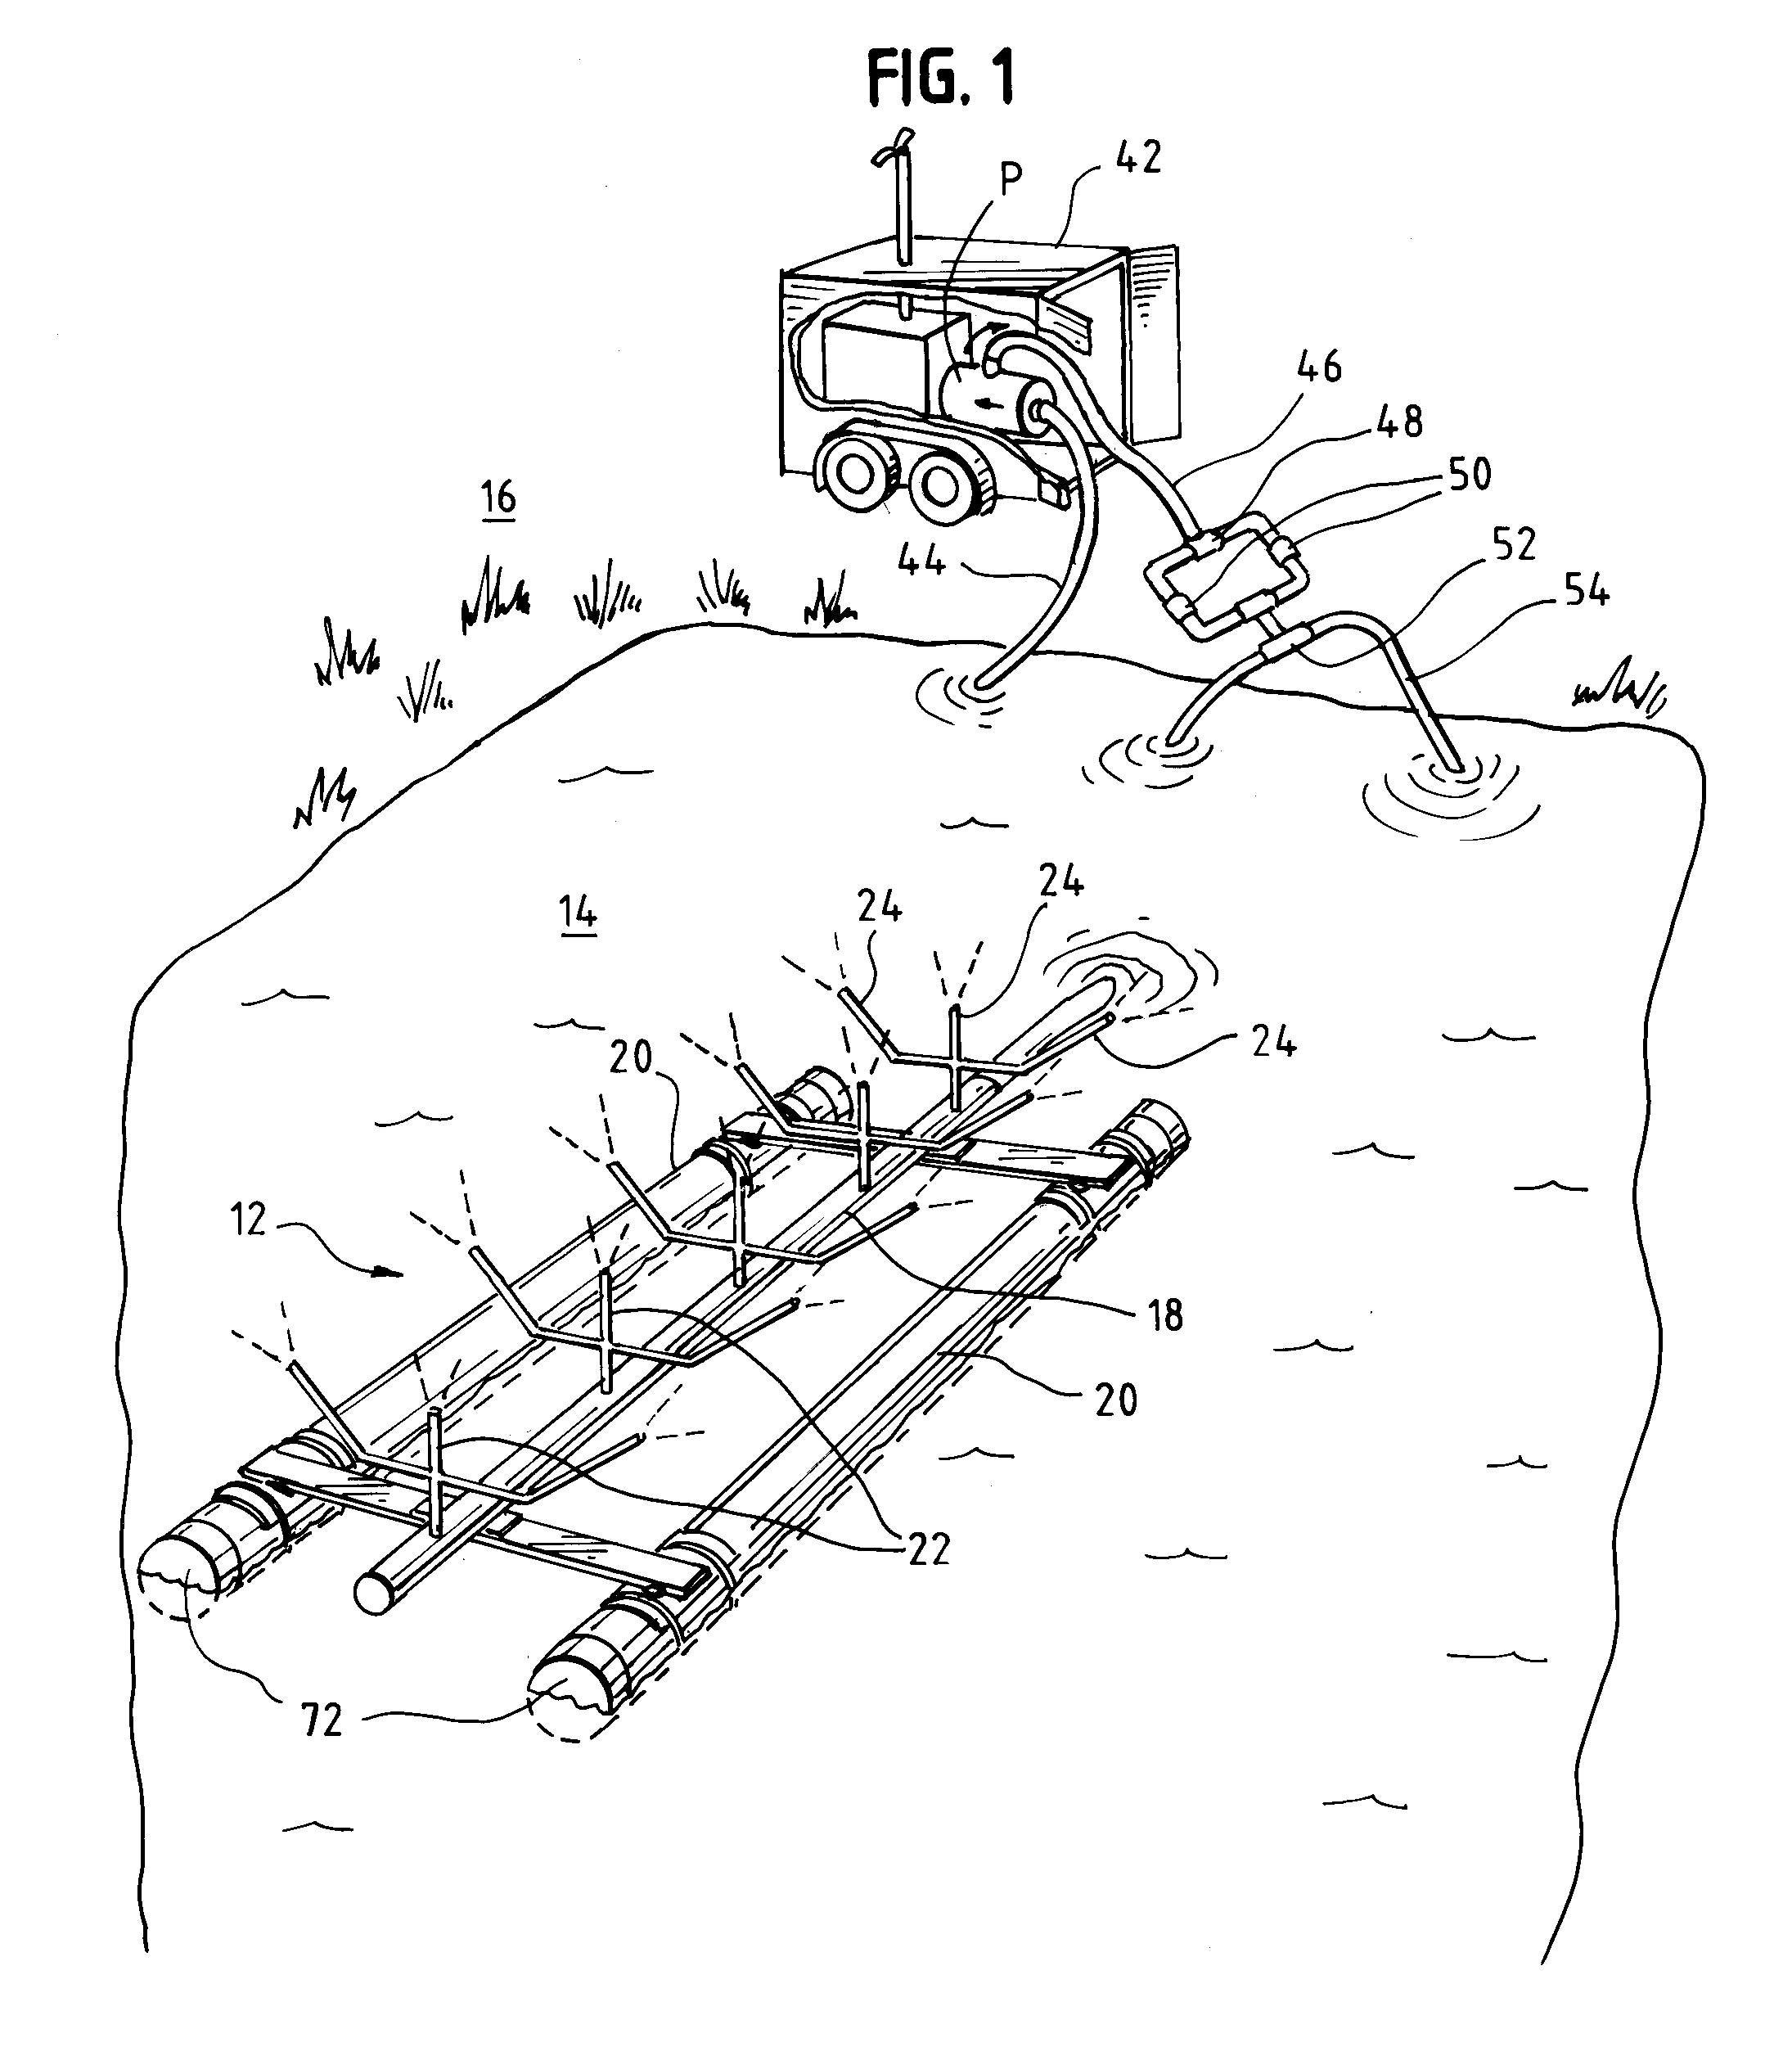 Modular floating water evaporation system